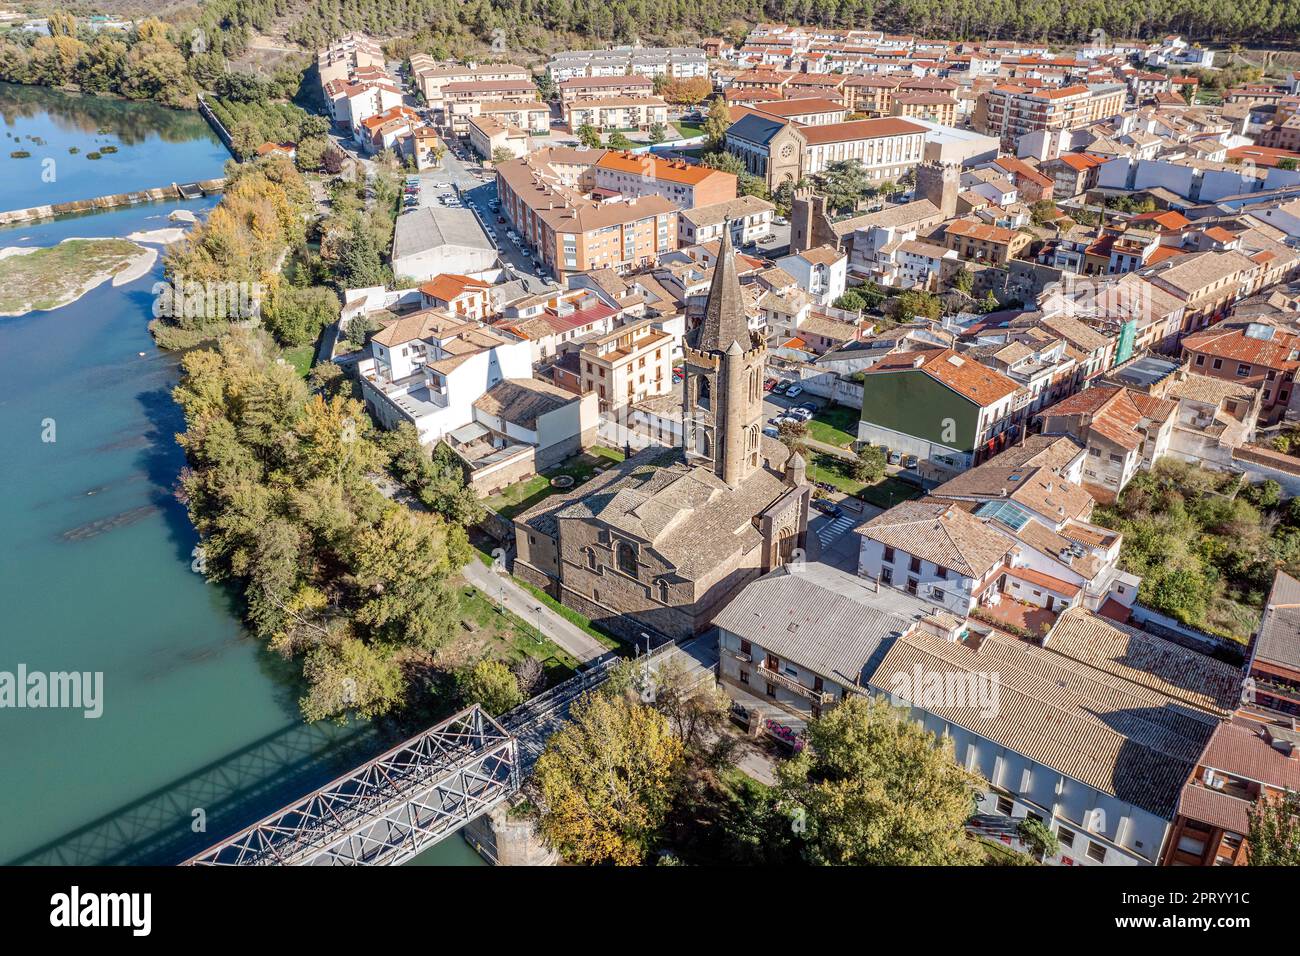 Blick auf die Kirche Santa Maria la Real in Sanguesa - Spanien Luftbild Stockfoto